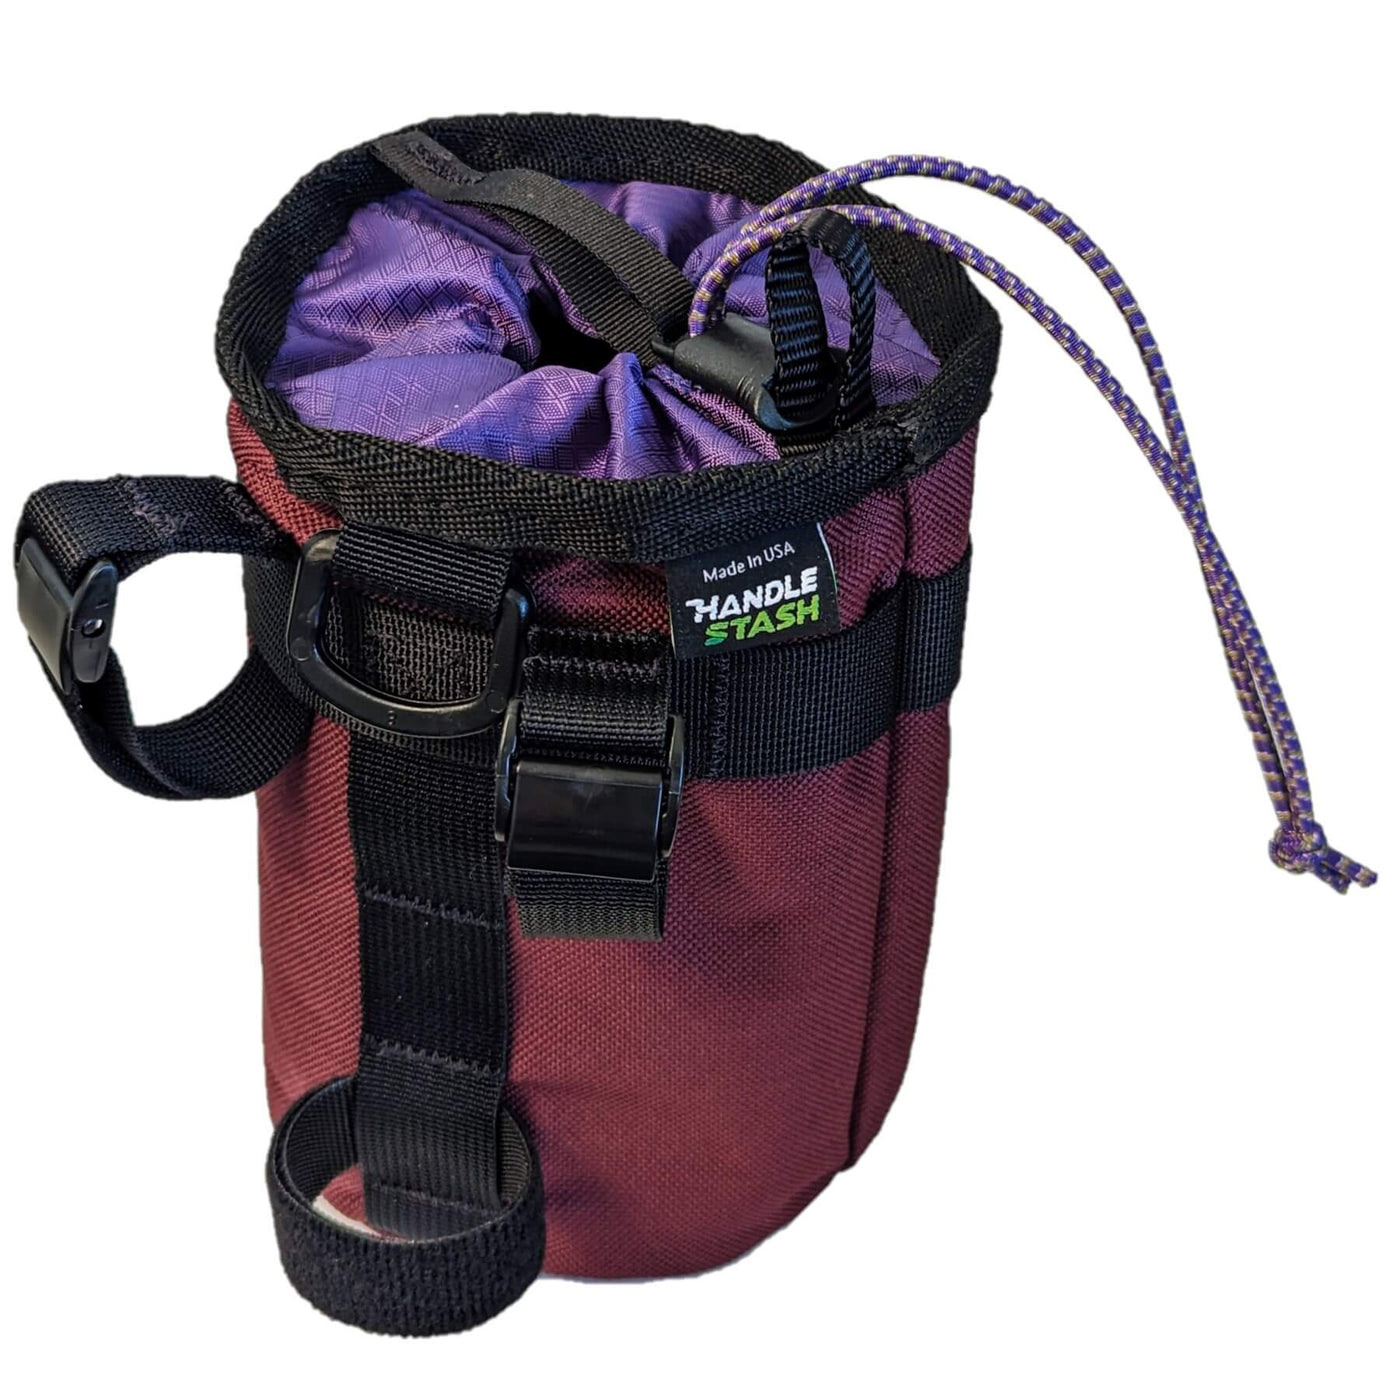 Wine colored HandleStash stem bag with straps